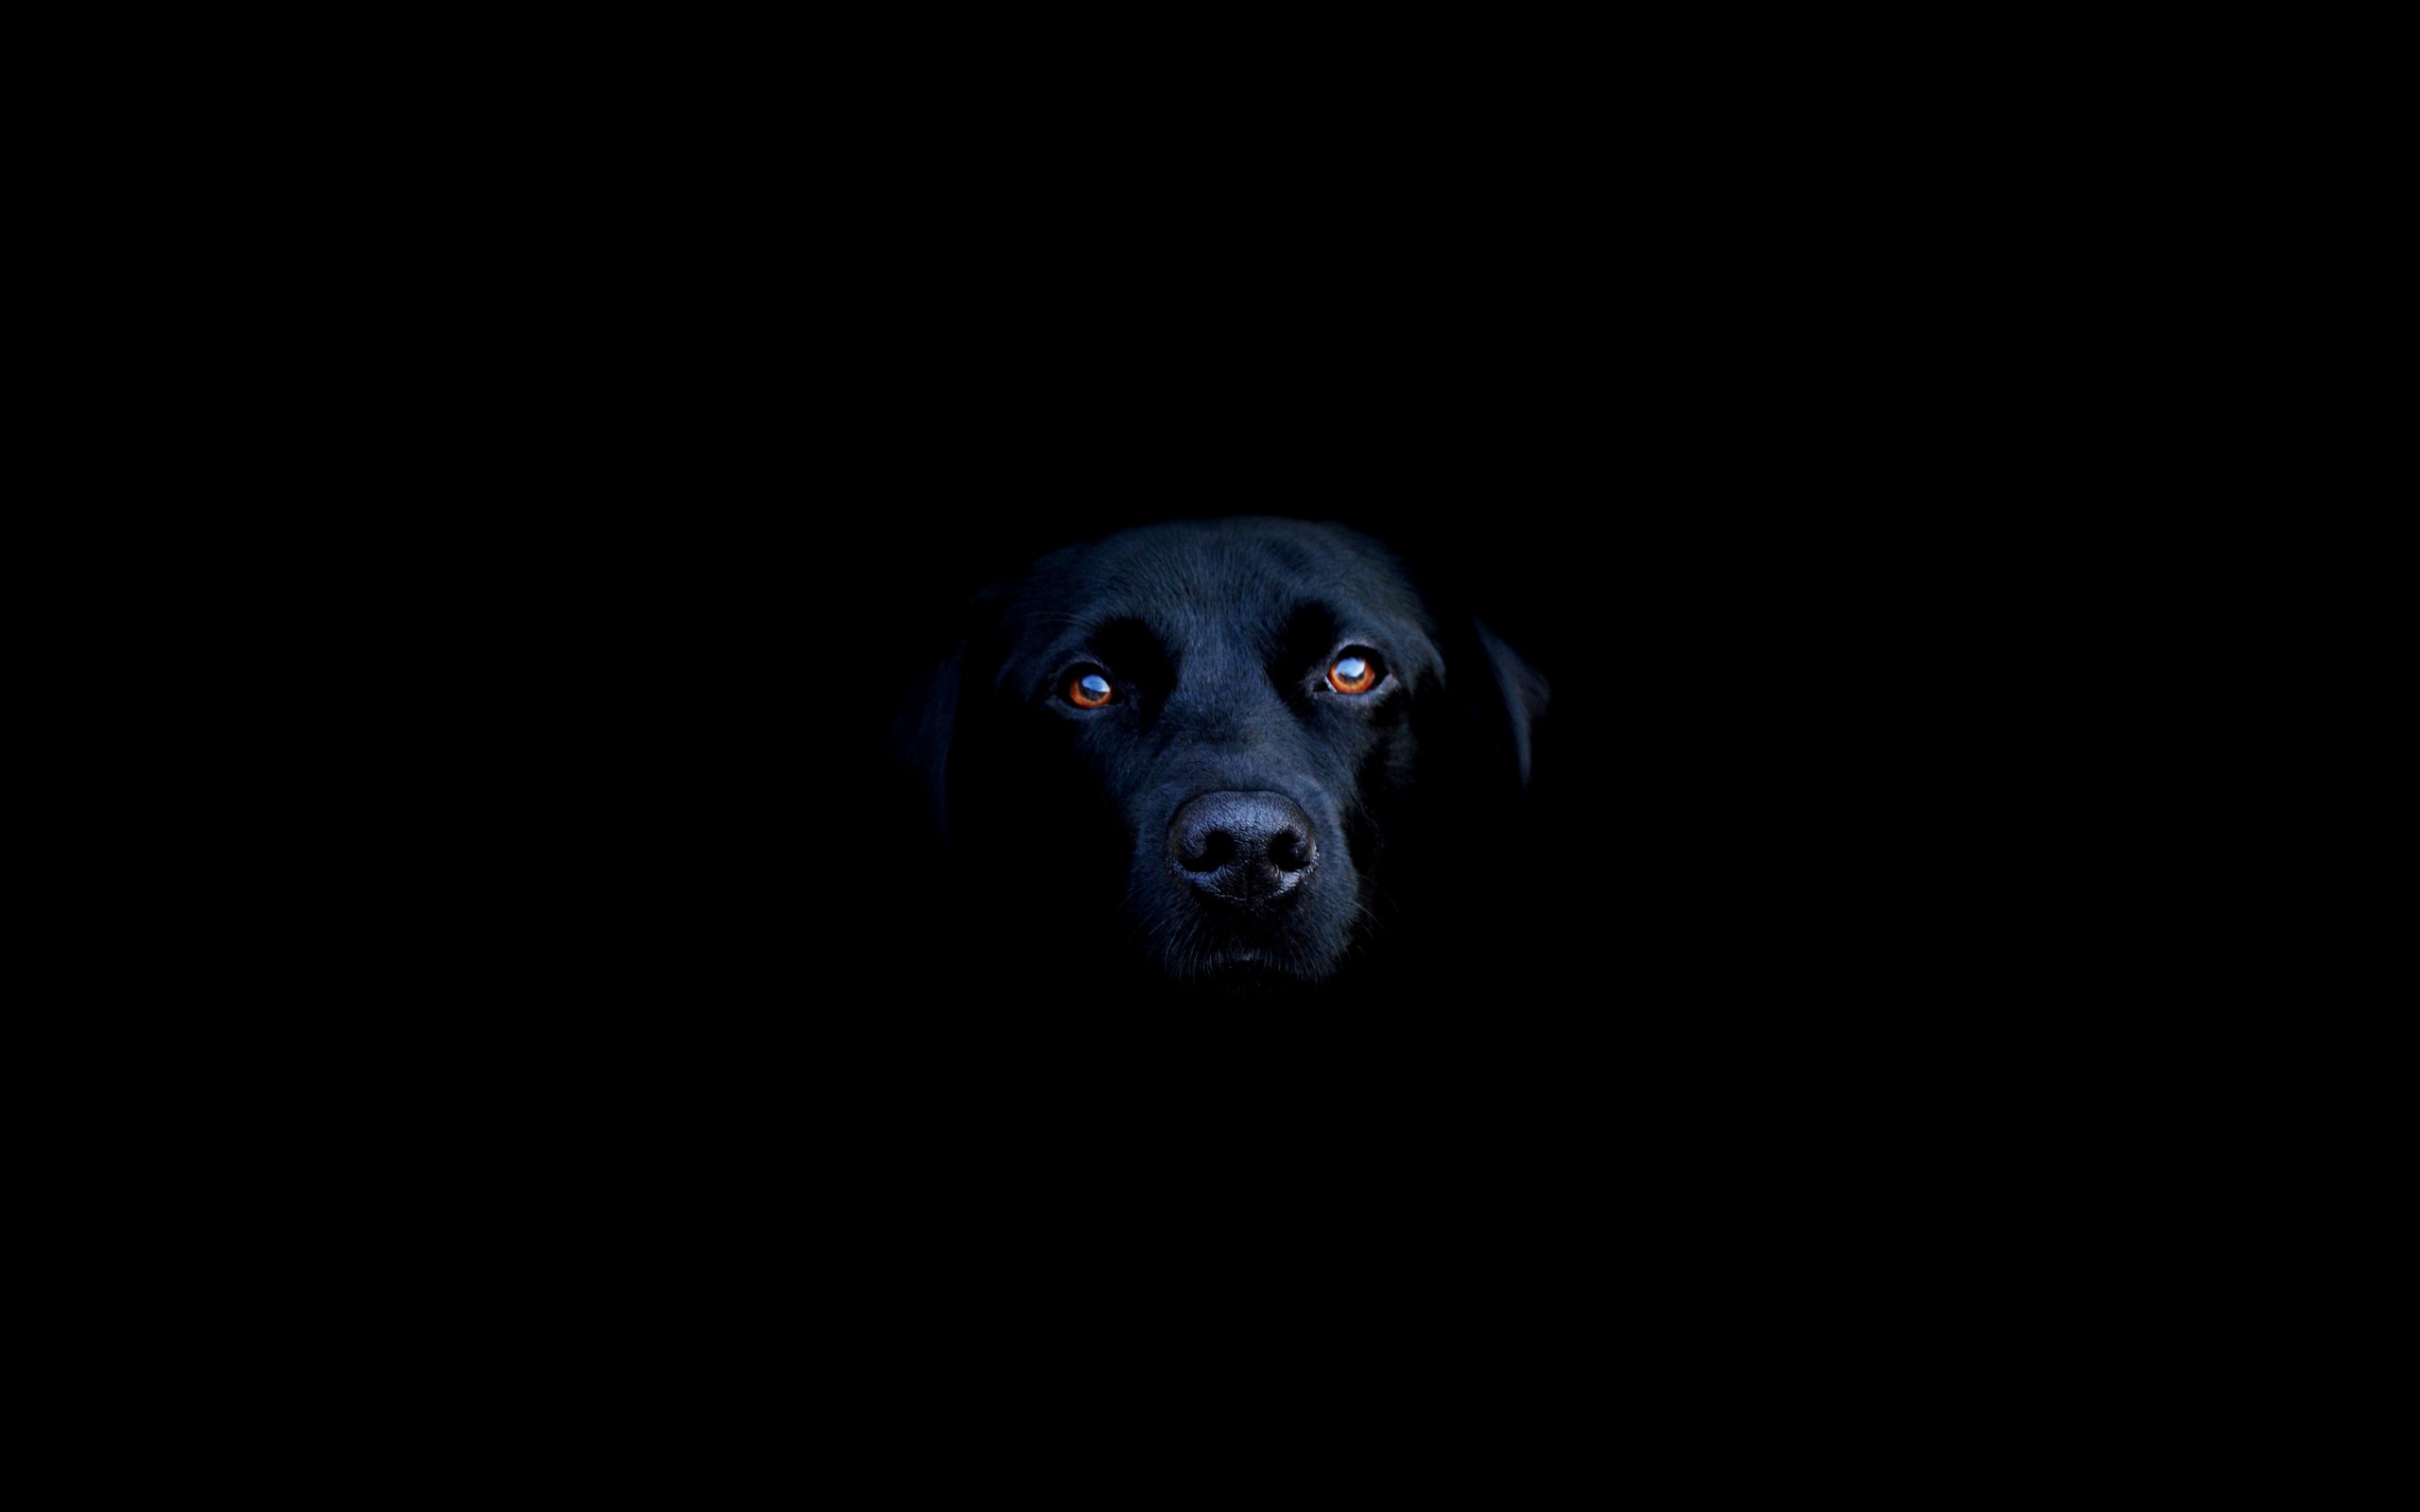 General 2560x1600 animals dog mammals minimalism animal eyes black background simple background